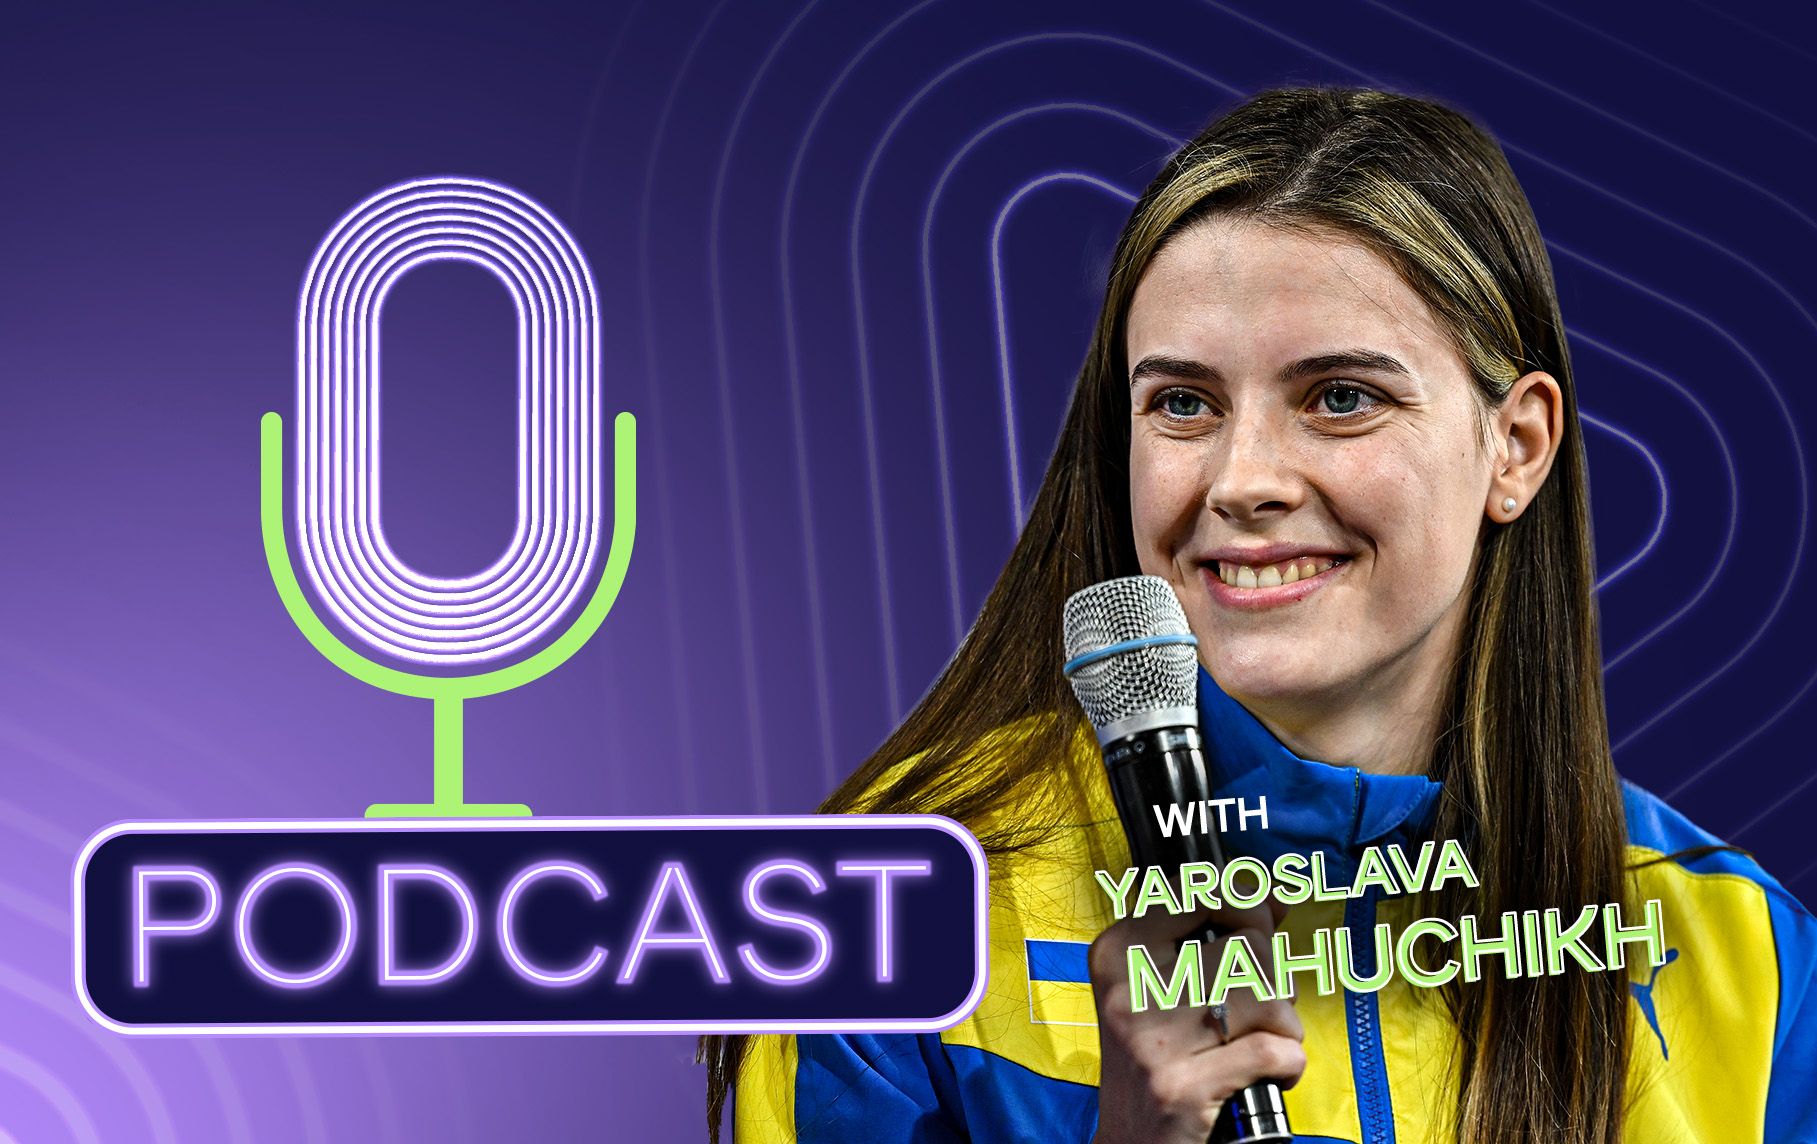 World Athletics Official Podcast | Yaroslava Mahuchikh